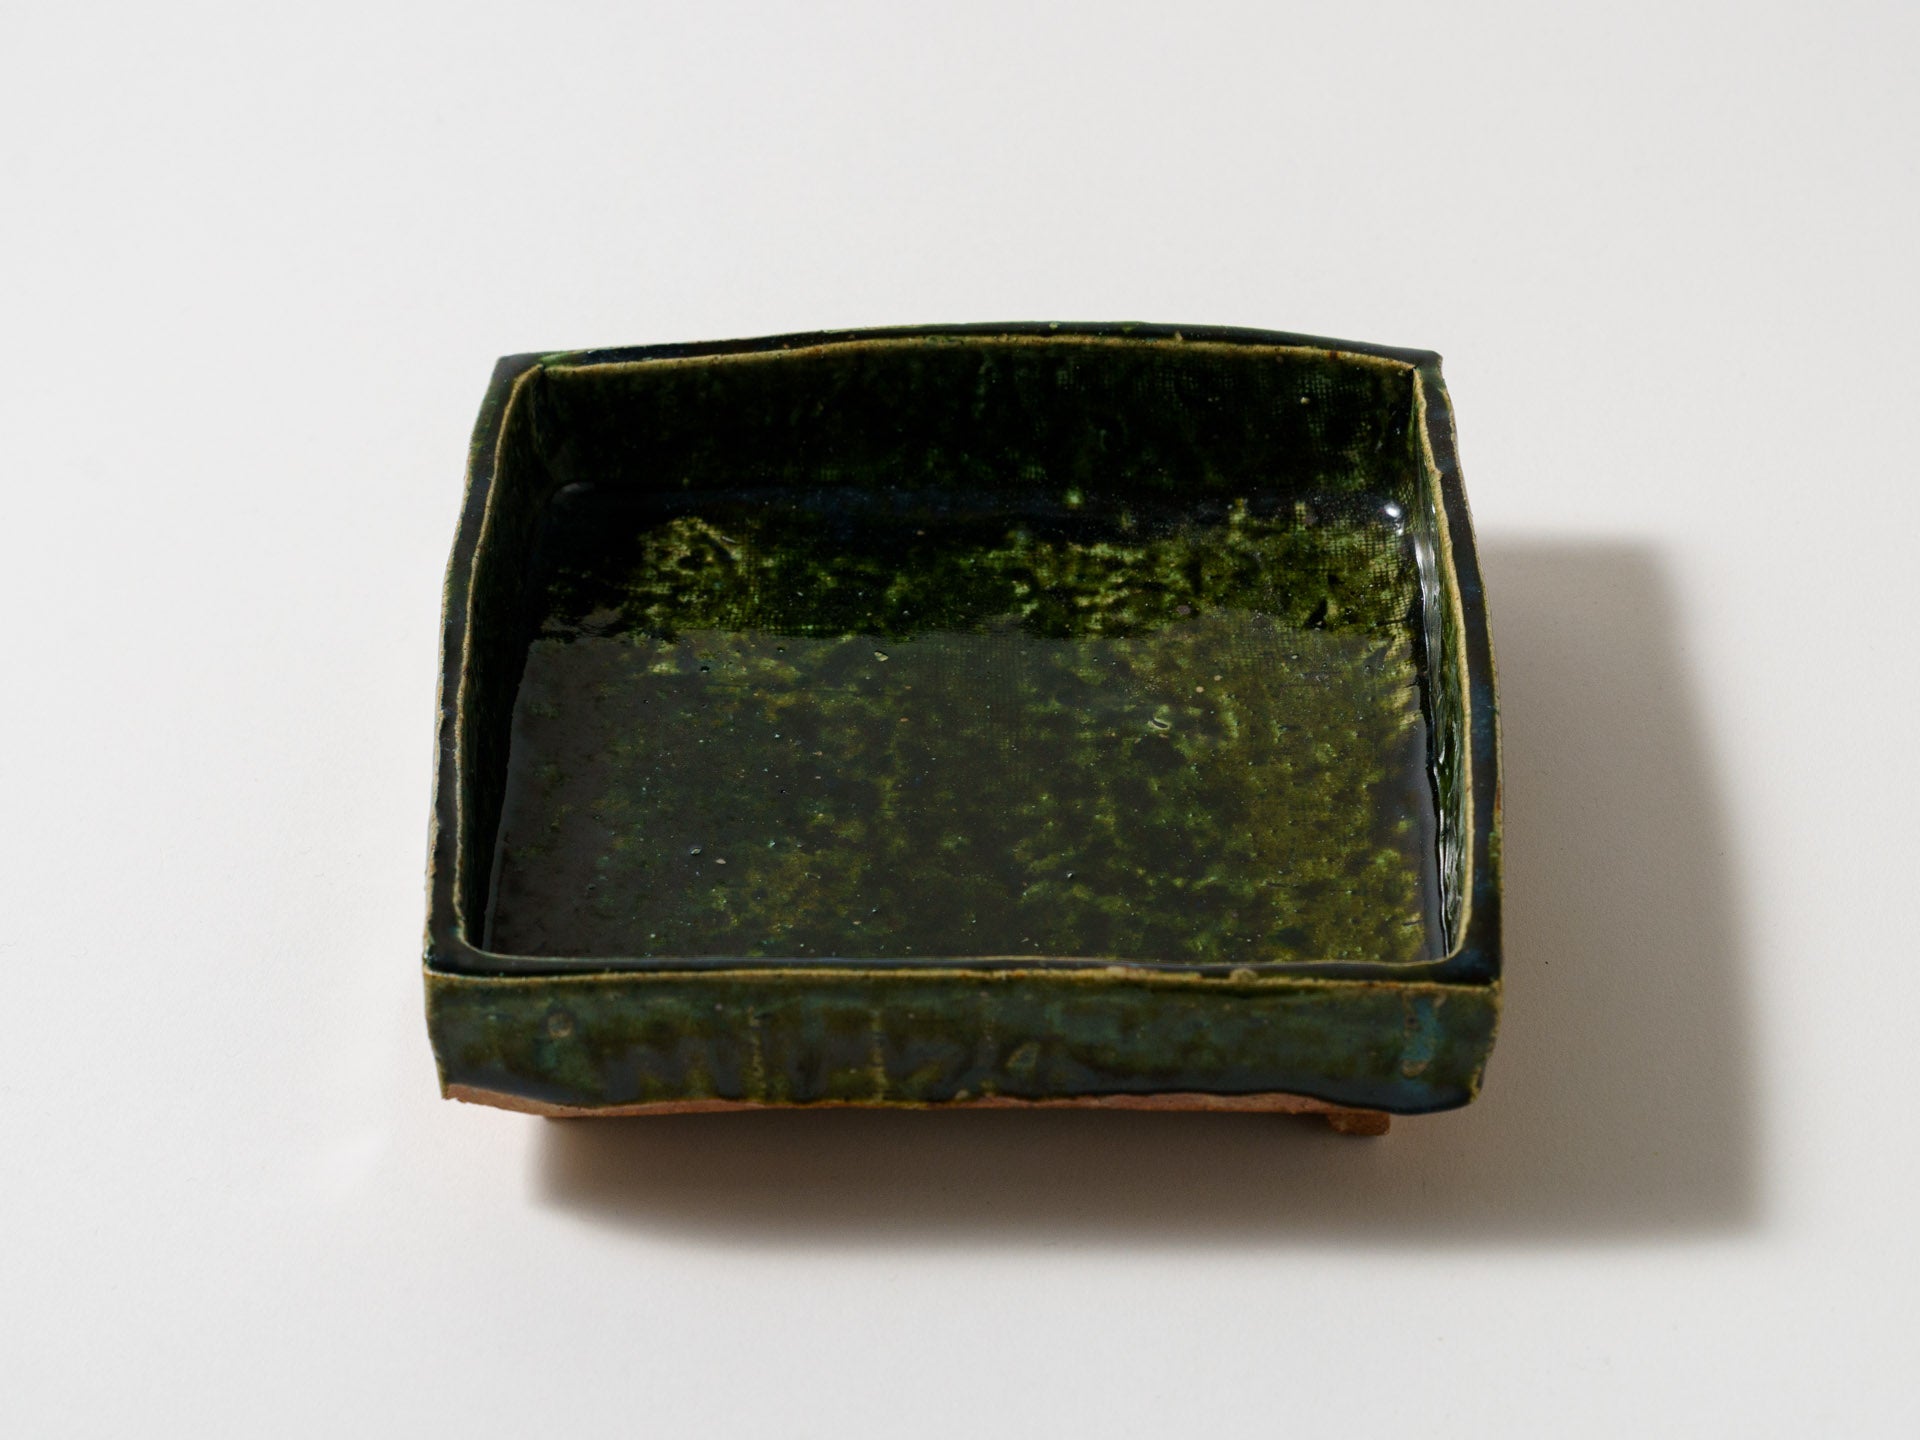 Oribe square bowl [Kazuji Sato]